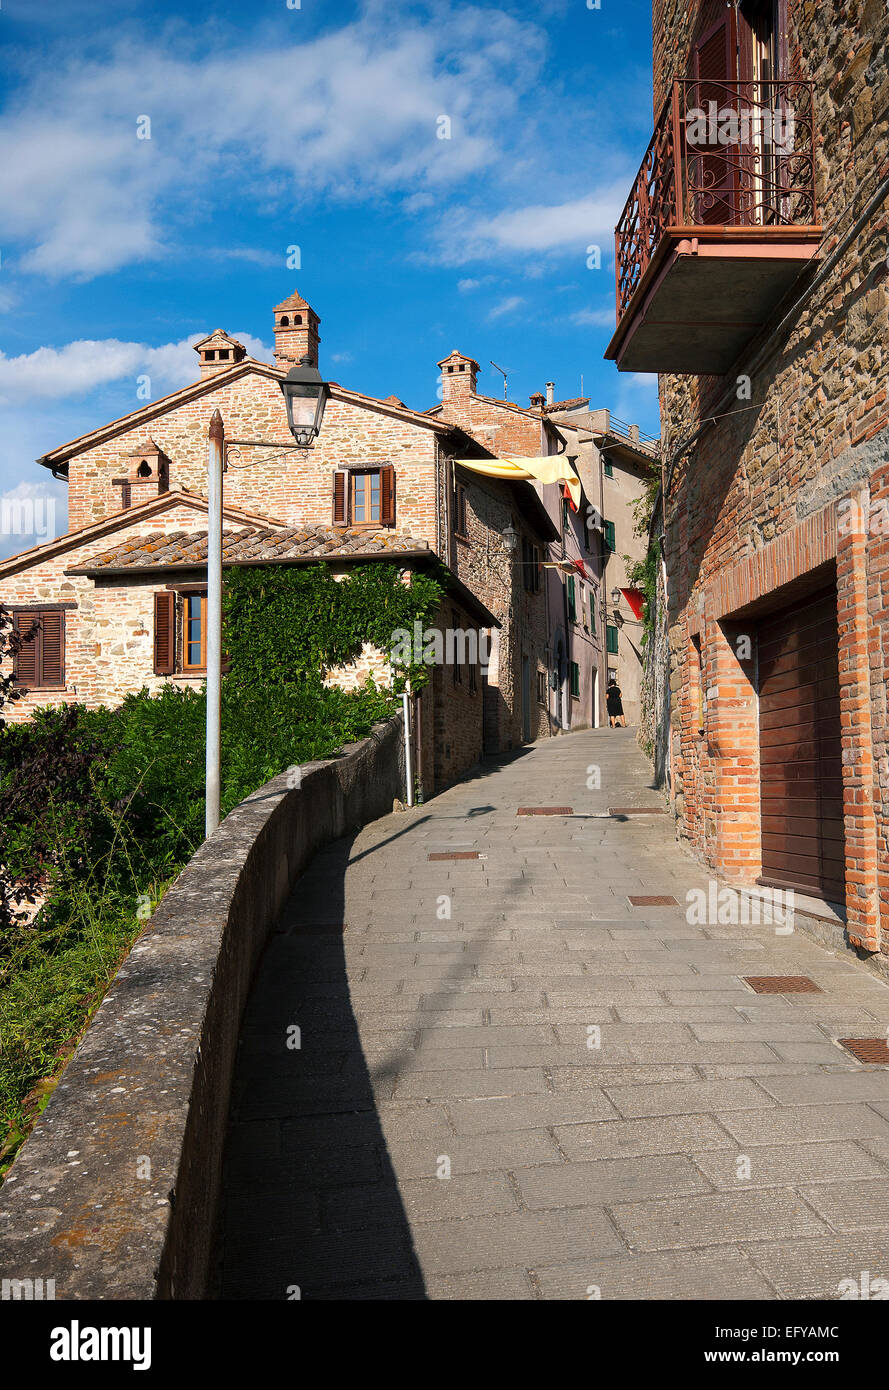 Village of Panicale, Umbria, Italy, Europe Stock Photo